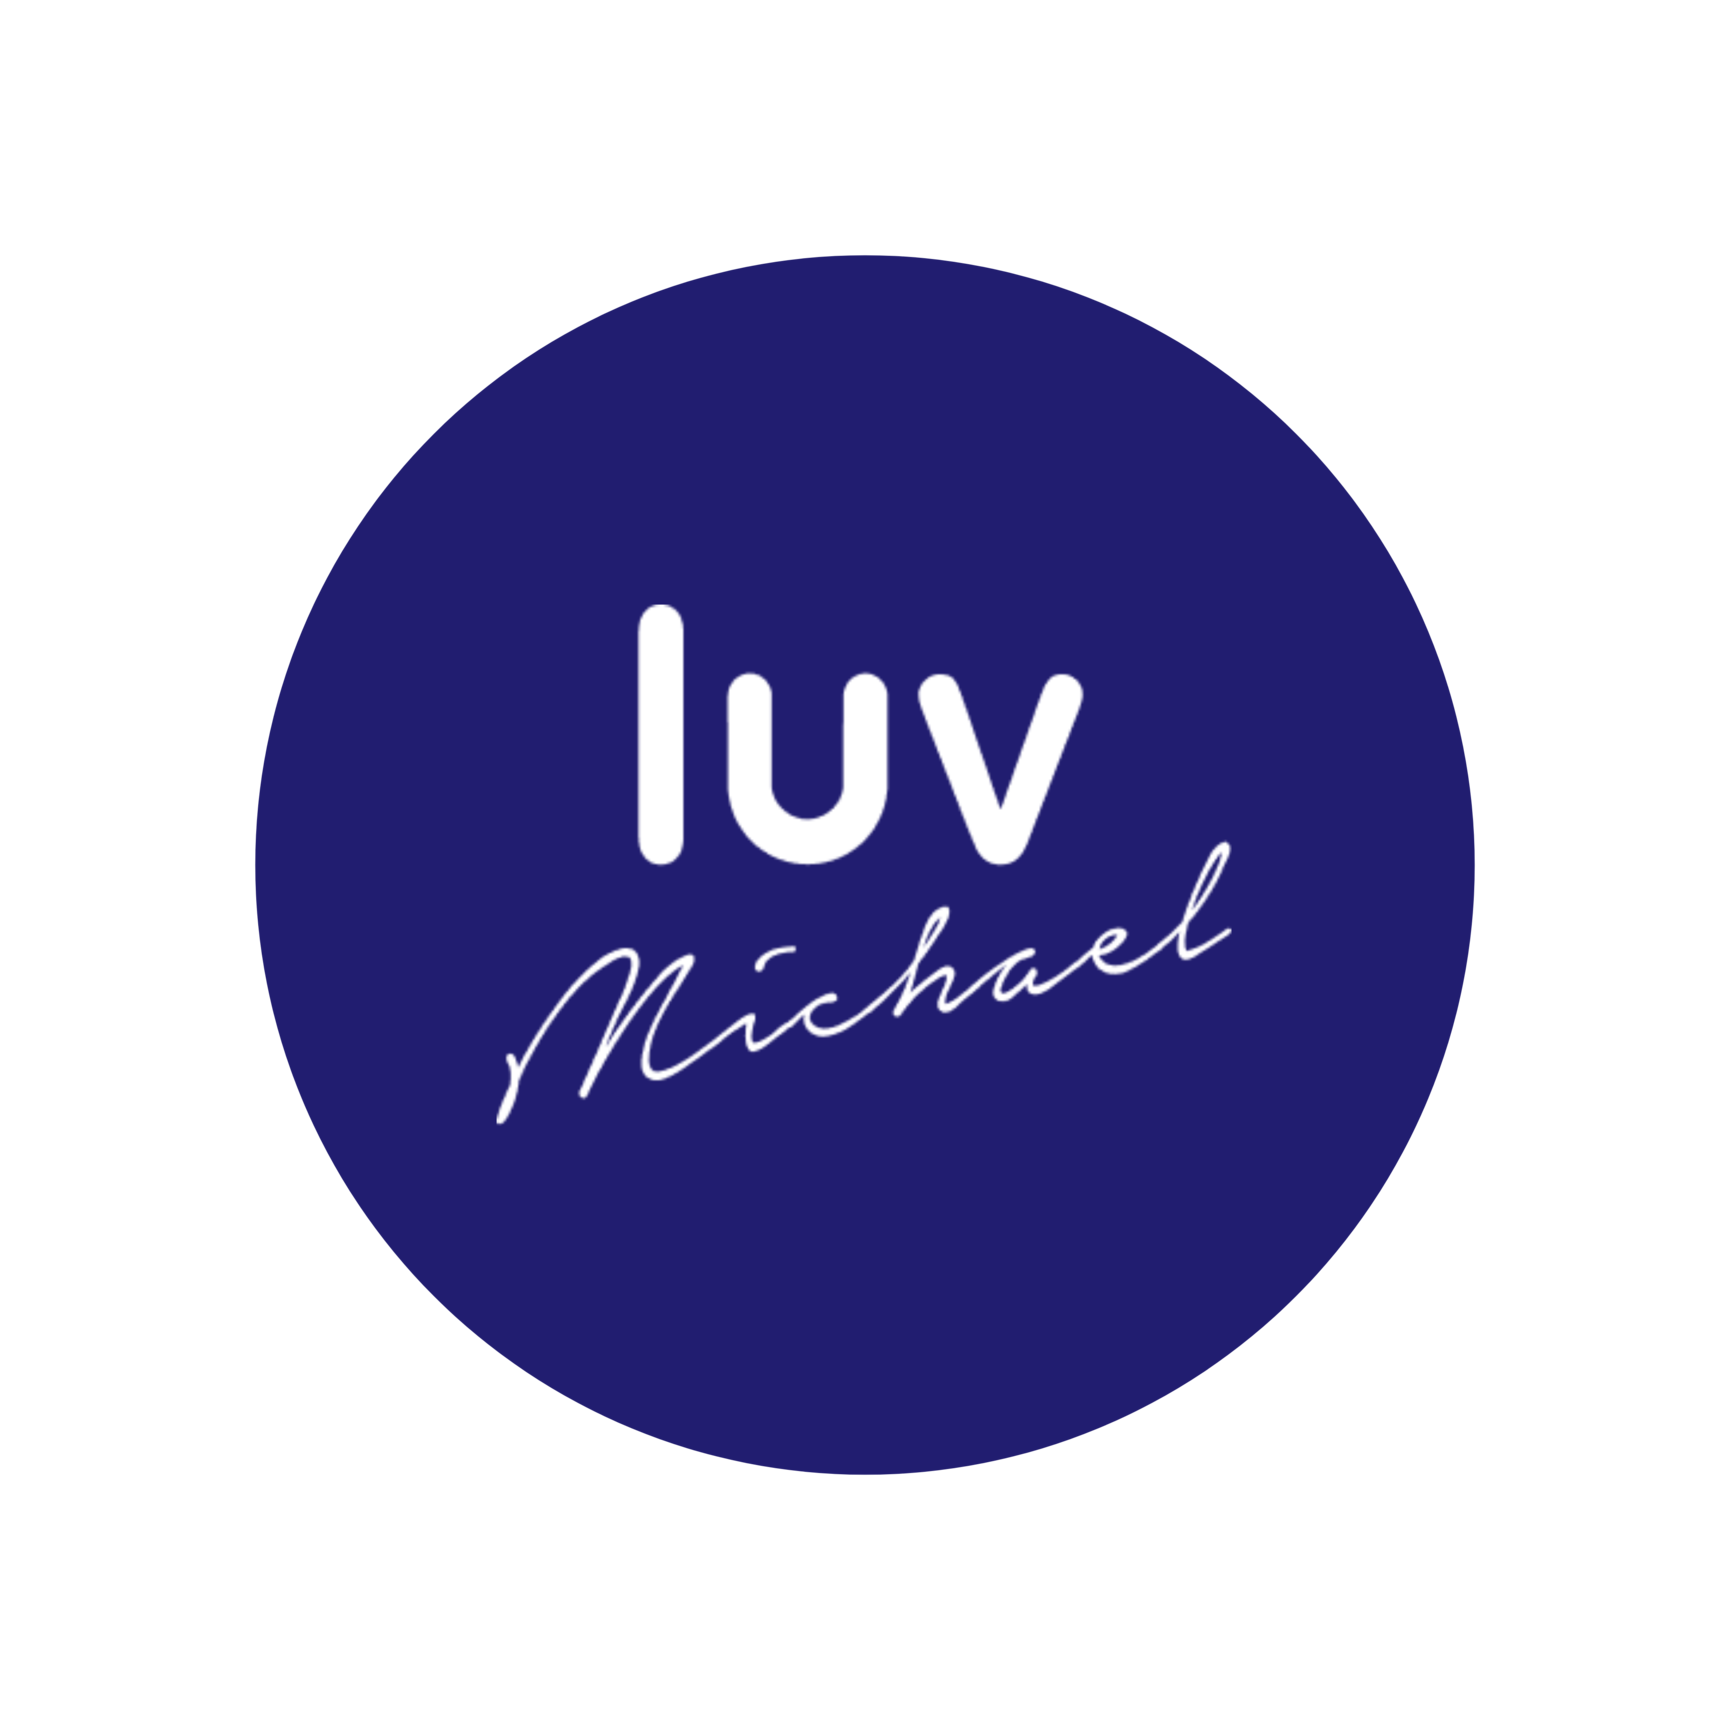 Luv Michael logo